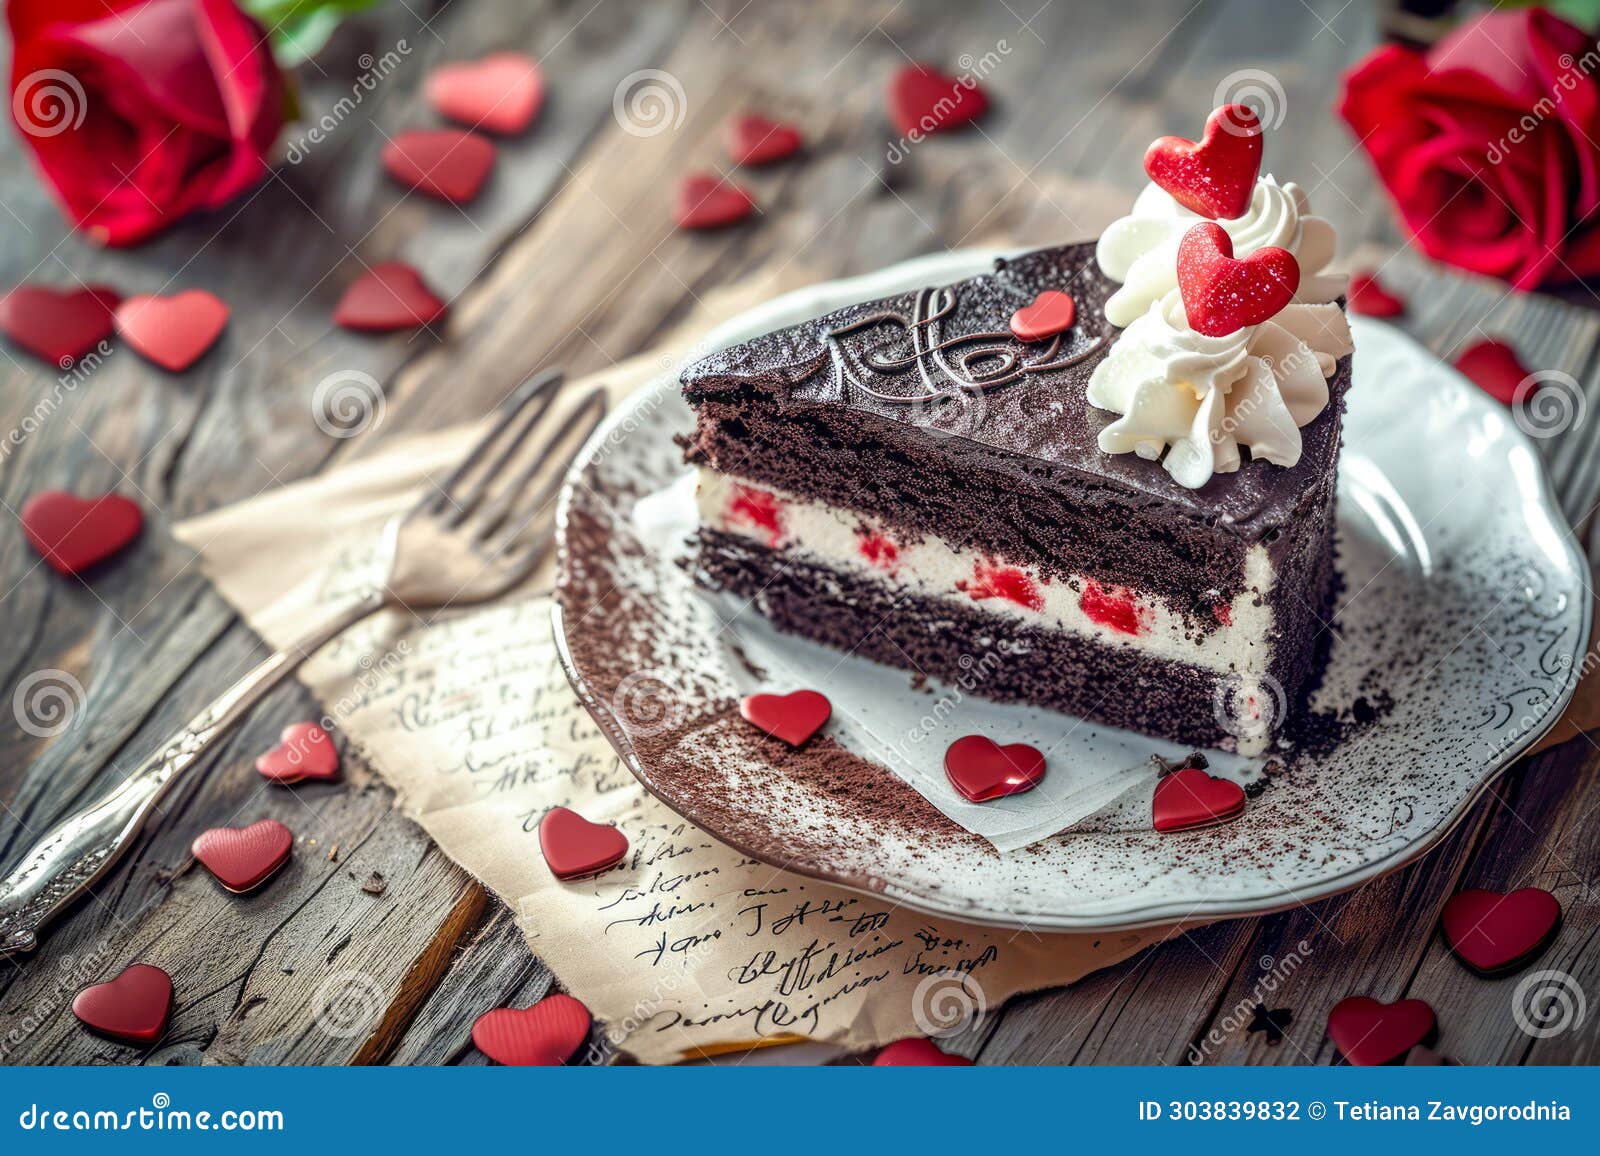 Romantic Valentine S Day Chocolate Cake Slice Stock Photo - Image of ...